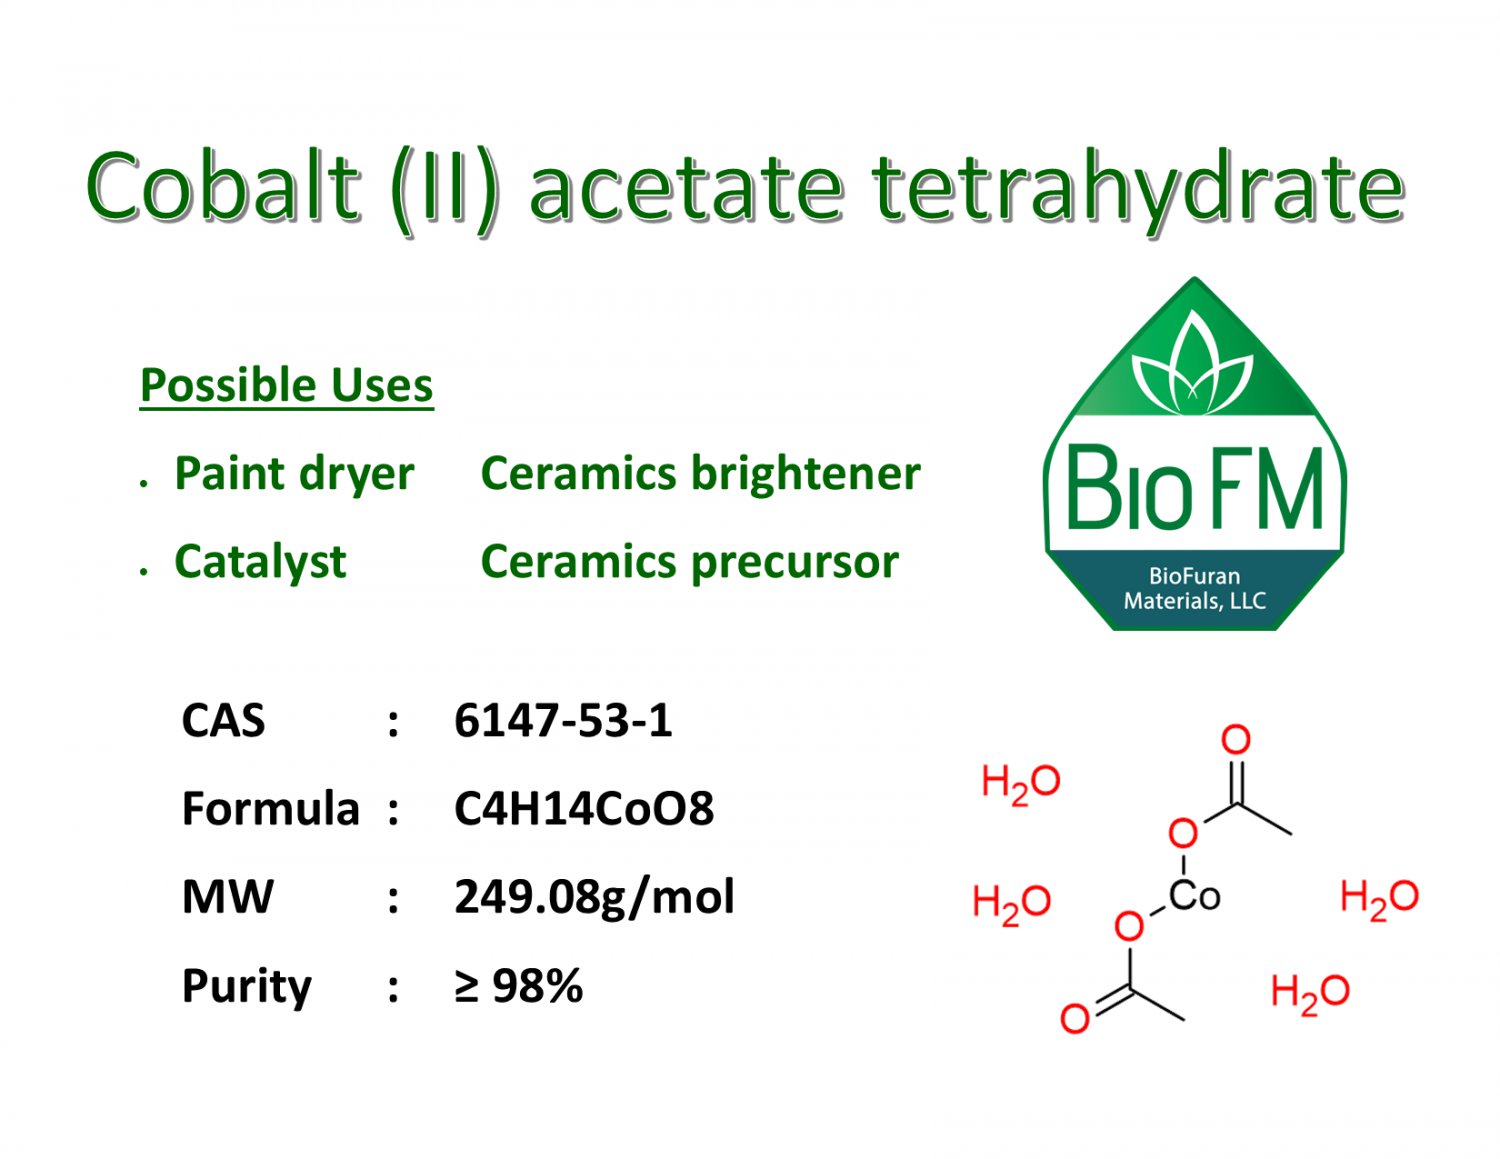 500g Cobalt acetate tetrahydrate